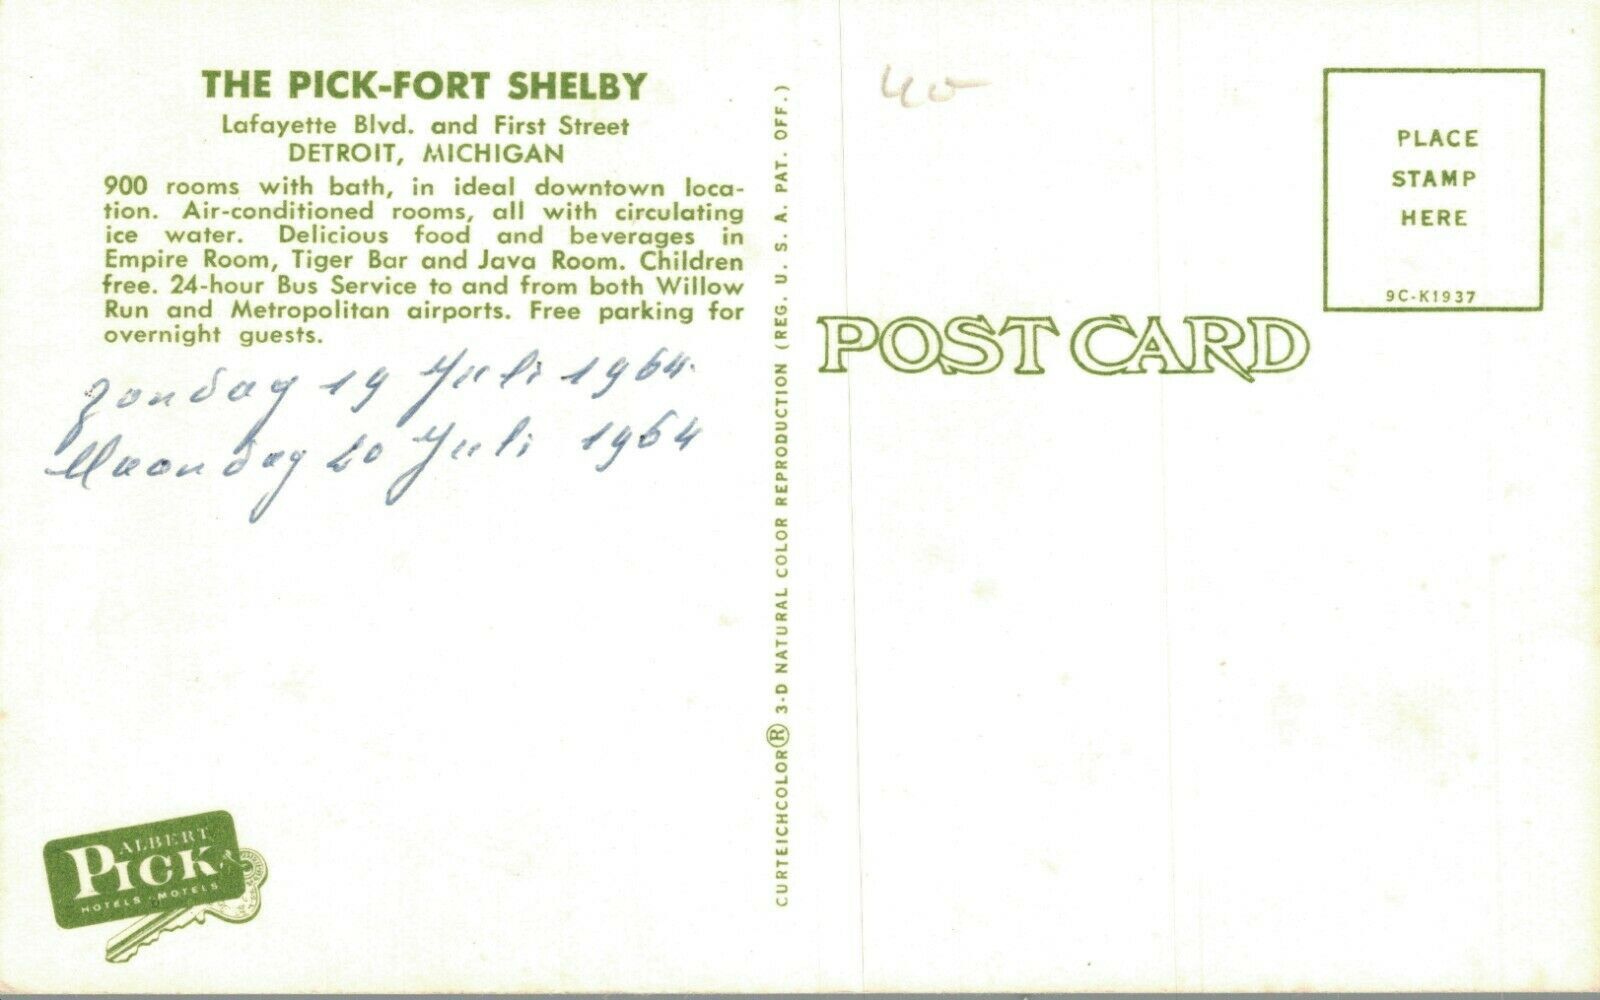 Vintage Postcard HOTEL Michigan   9C-K1937 Detroit The Pick-Fort Shelby 